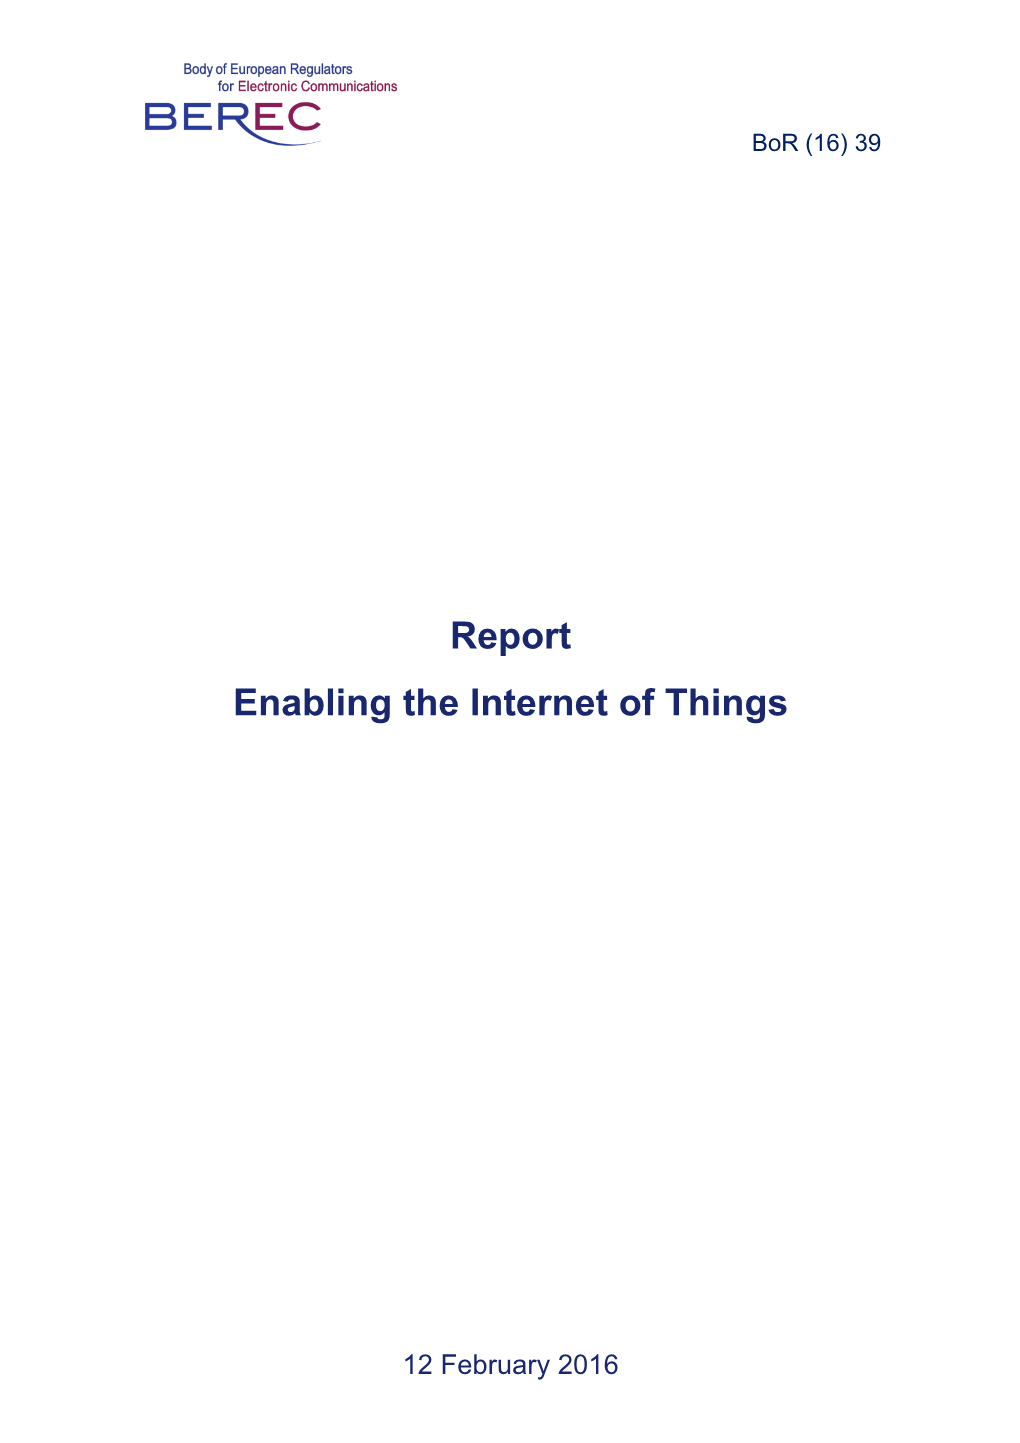 BEREC Report on Enabling the Internet of Things